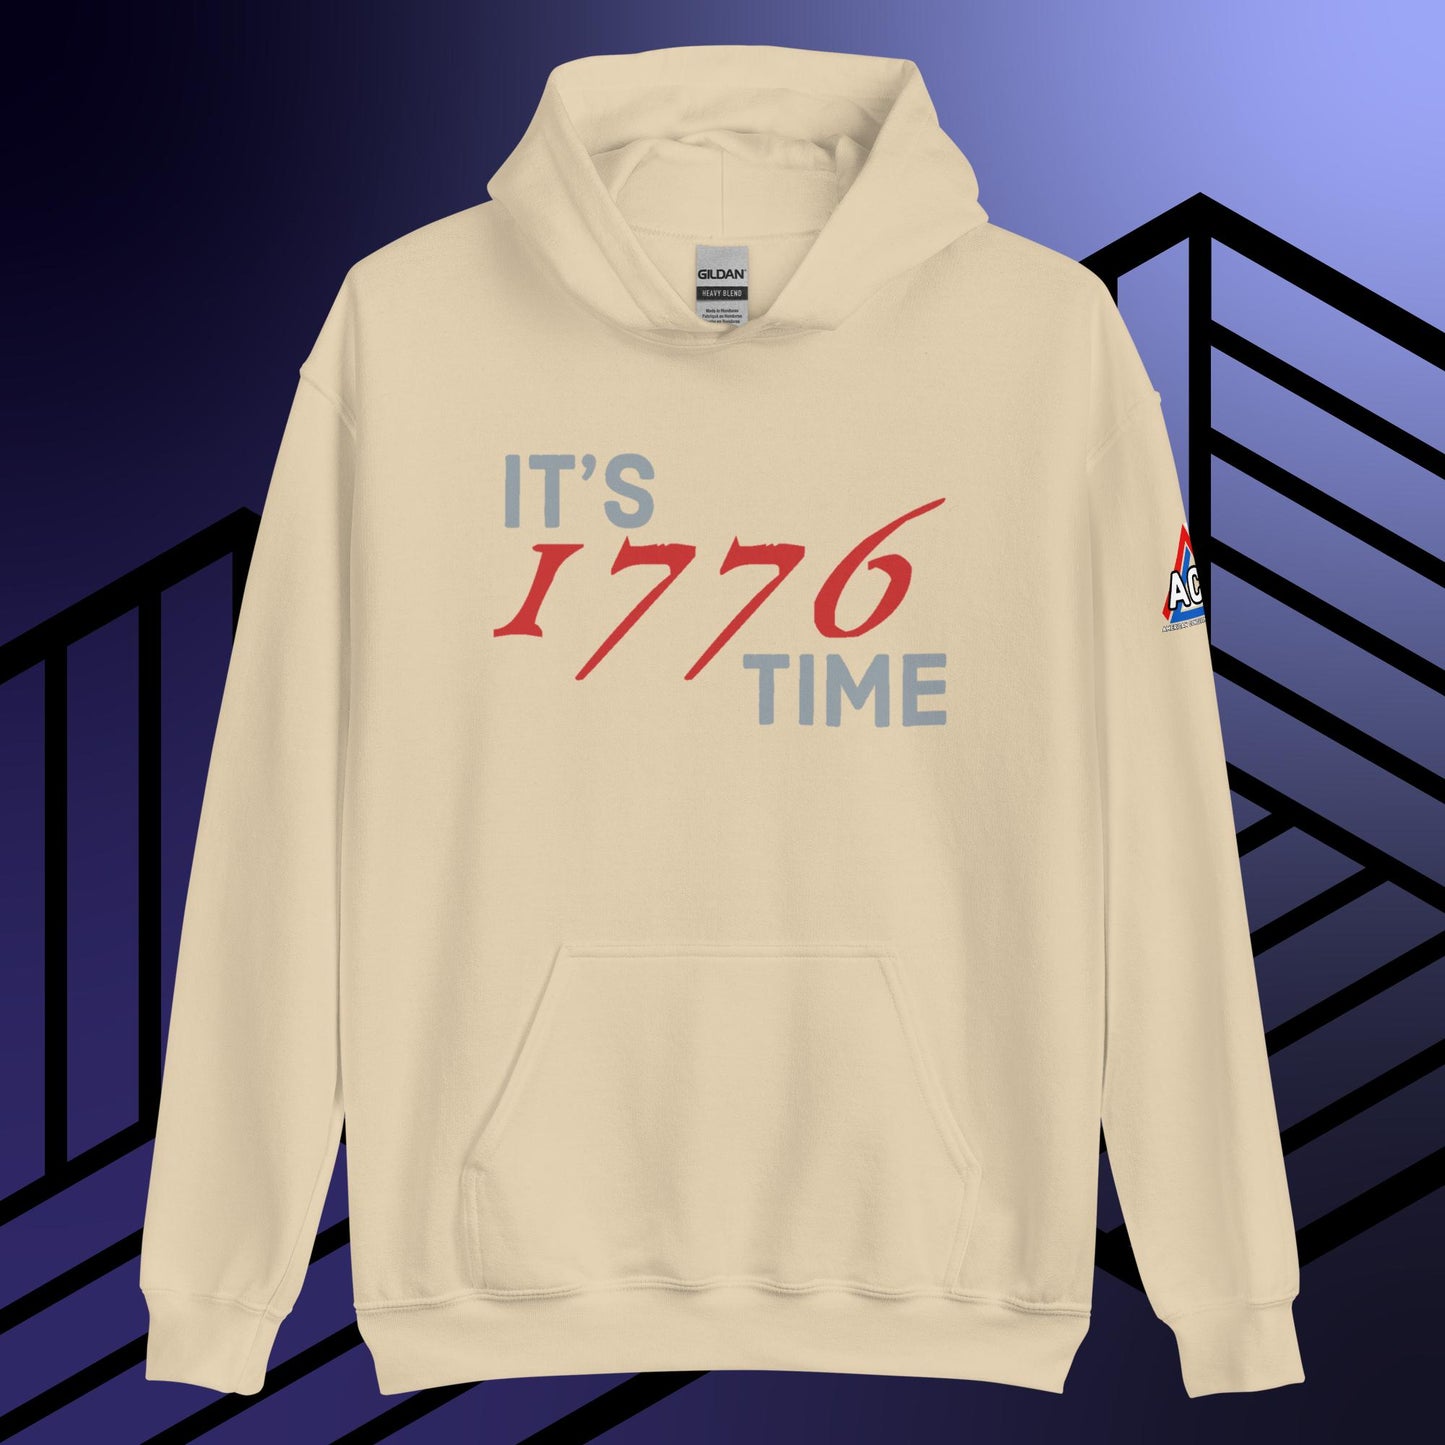 ACS IT'S 1776 TIME HOODIE